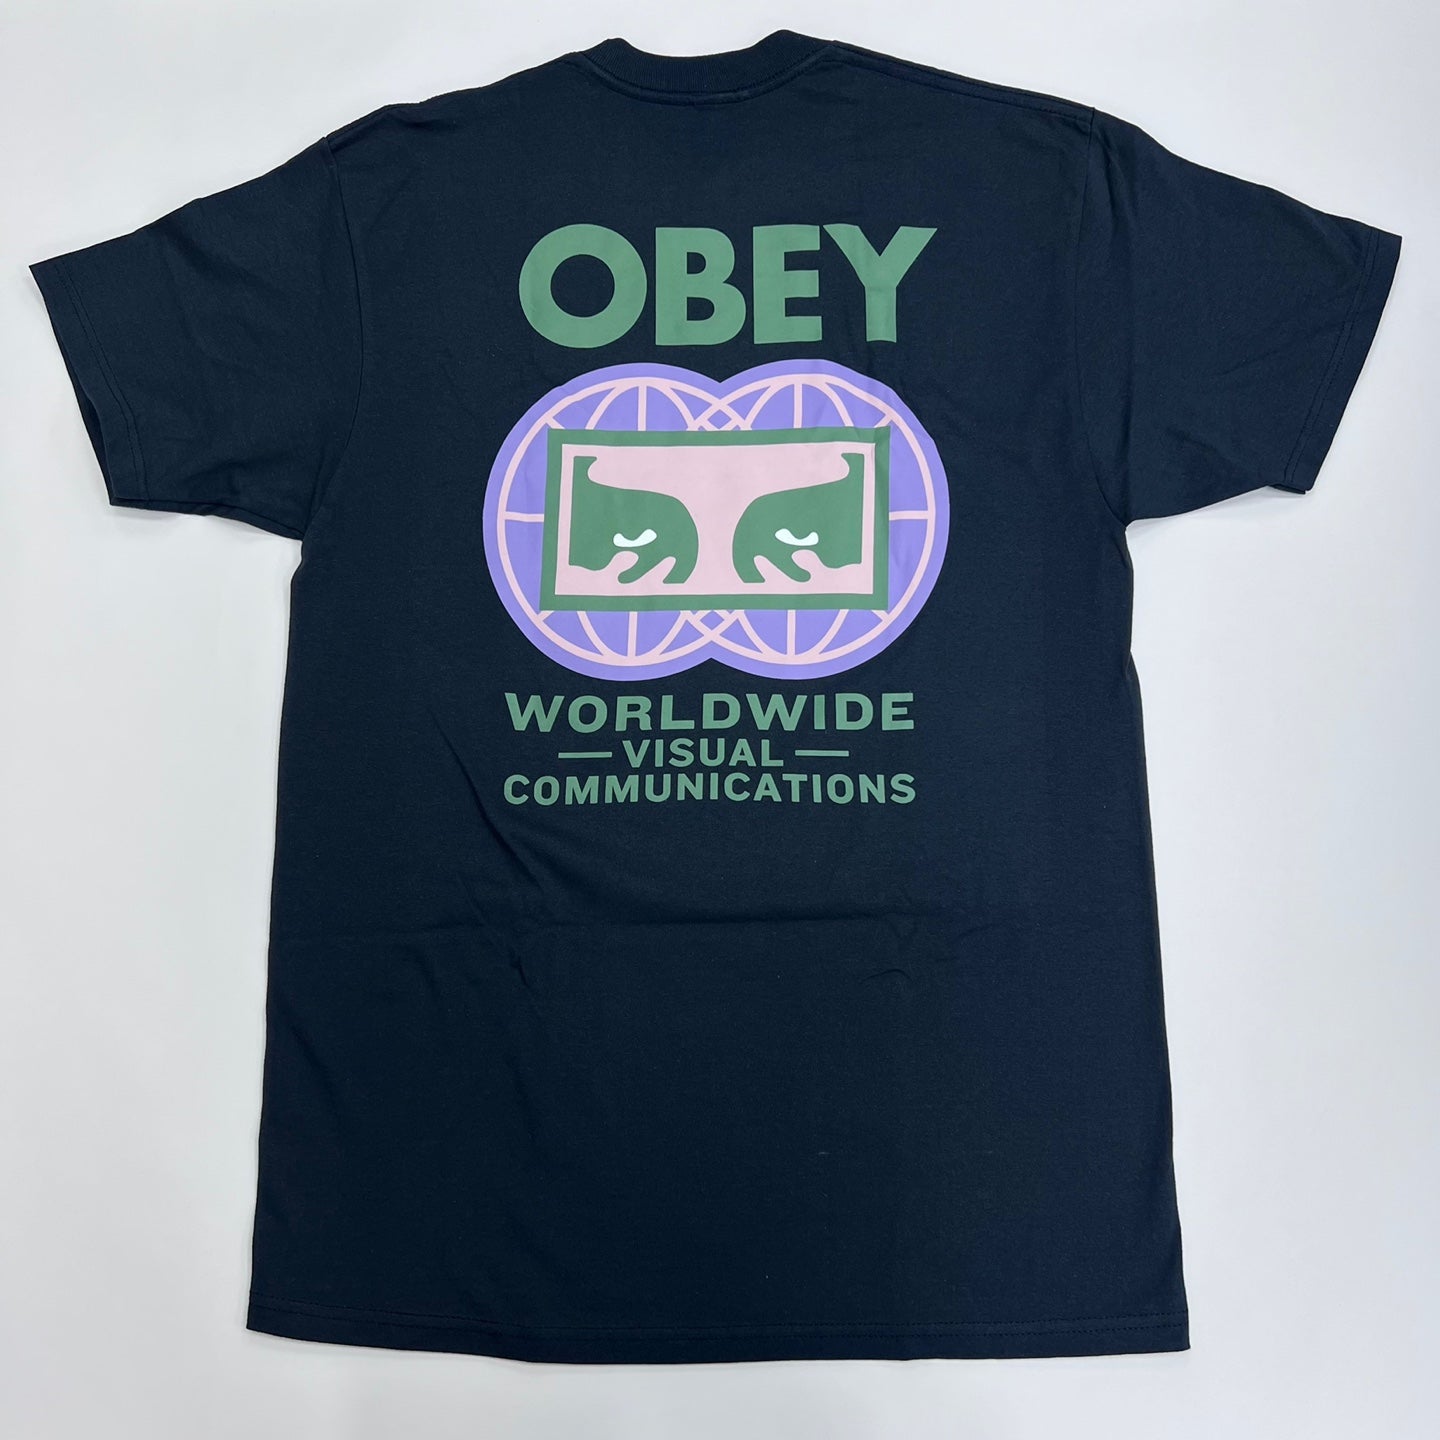 OBEY Worldwide Visual Communications T-Shirt - Navy